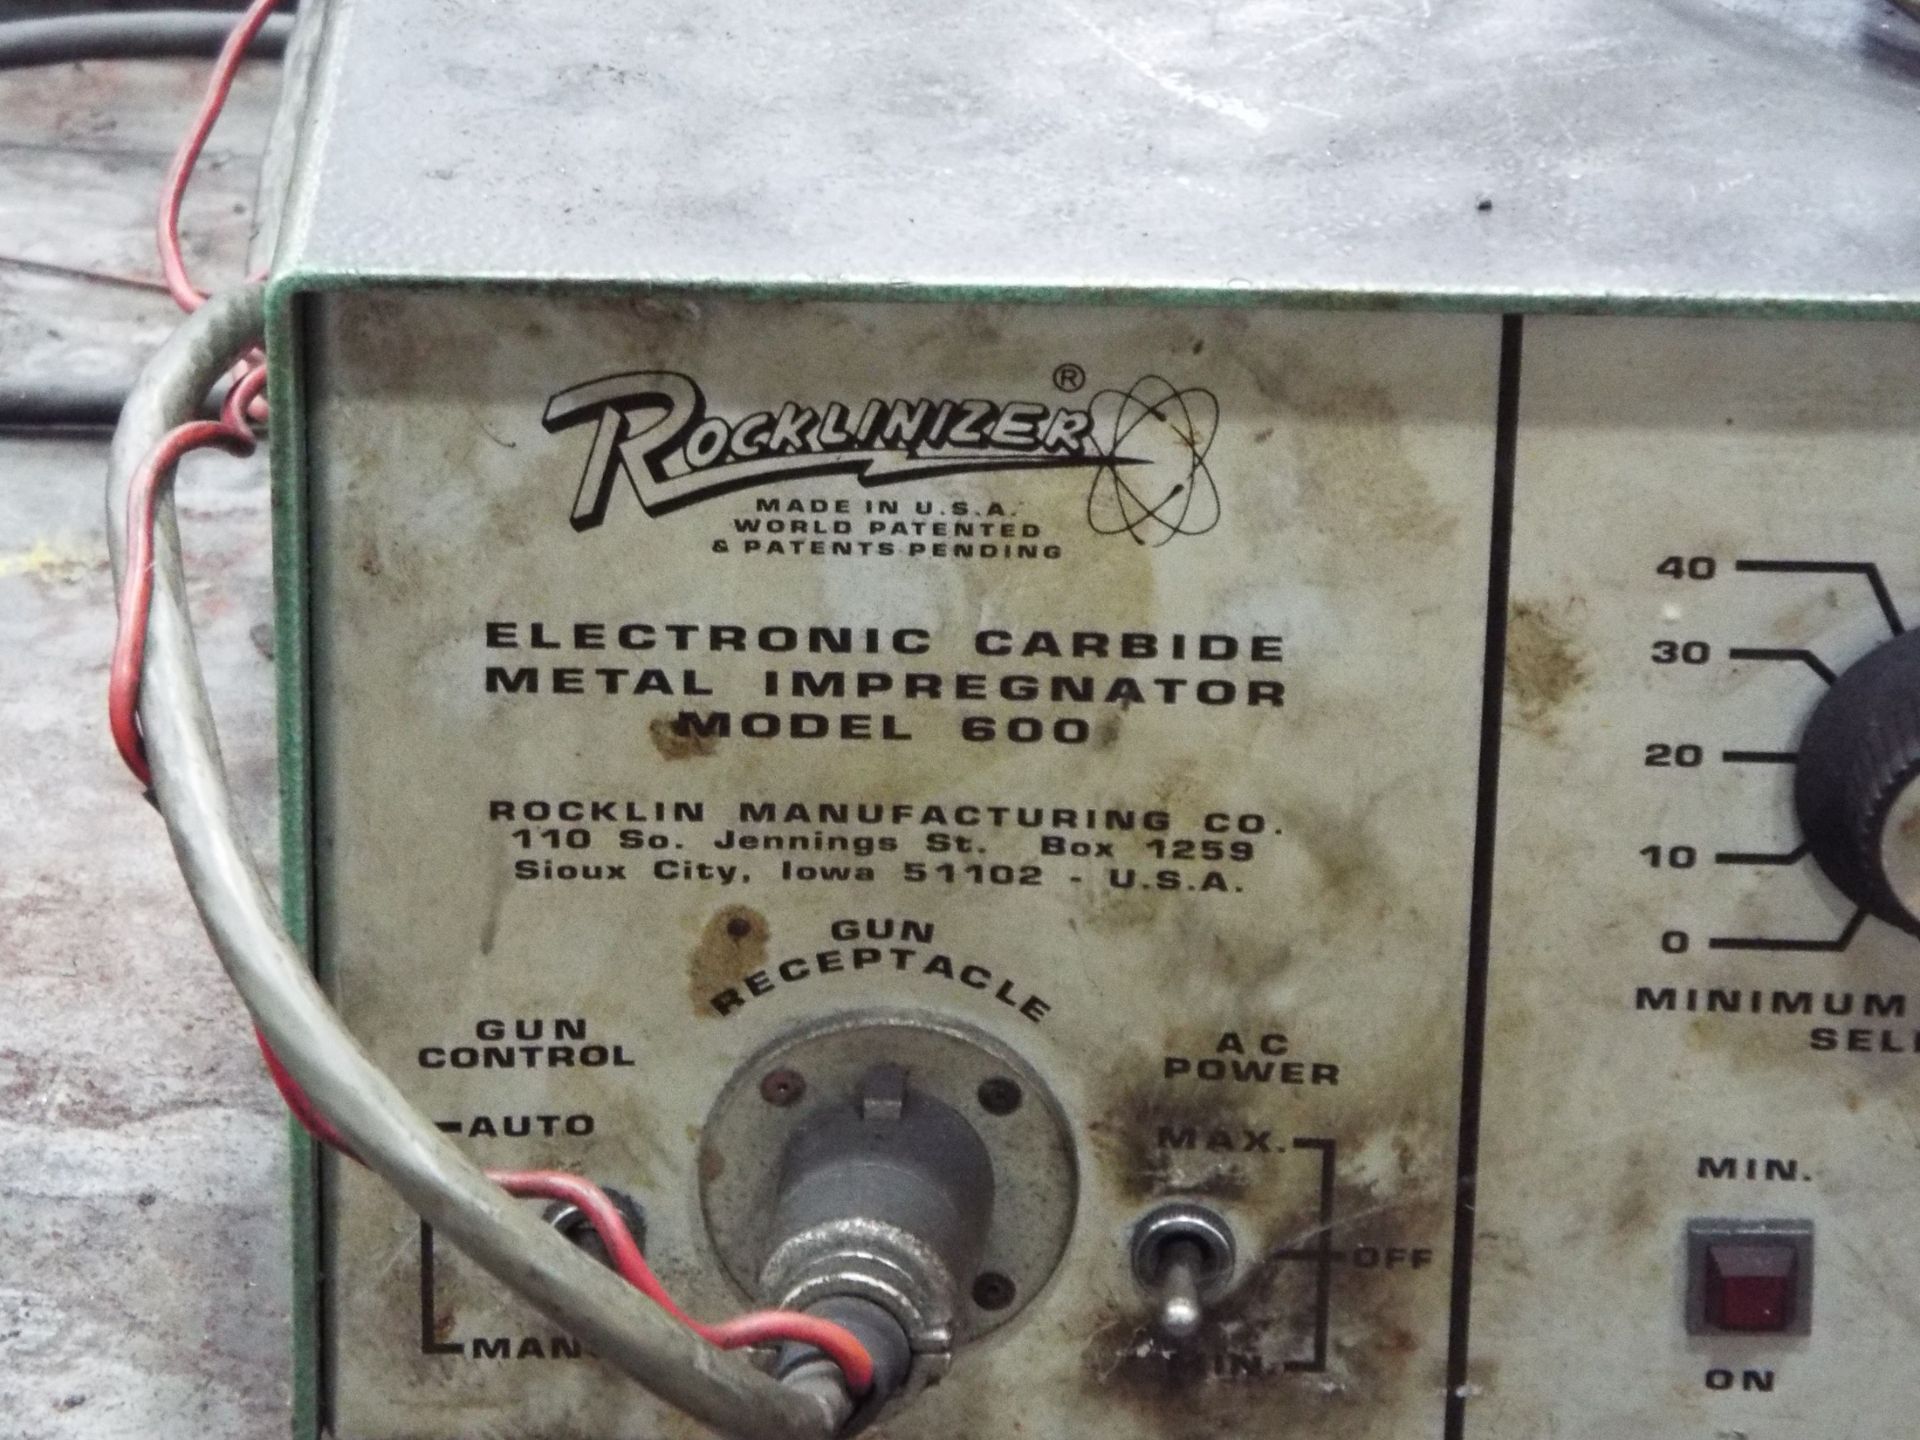 LOT/ ROCKLINIZER MODEL 600 ELECTRIC CARBIDE METAL IMPREGNATOR WITH CART - Image 3 of 3